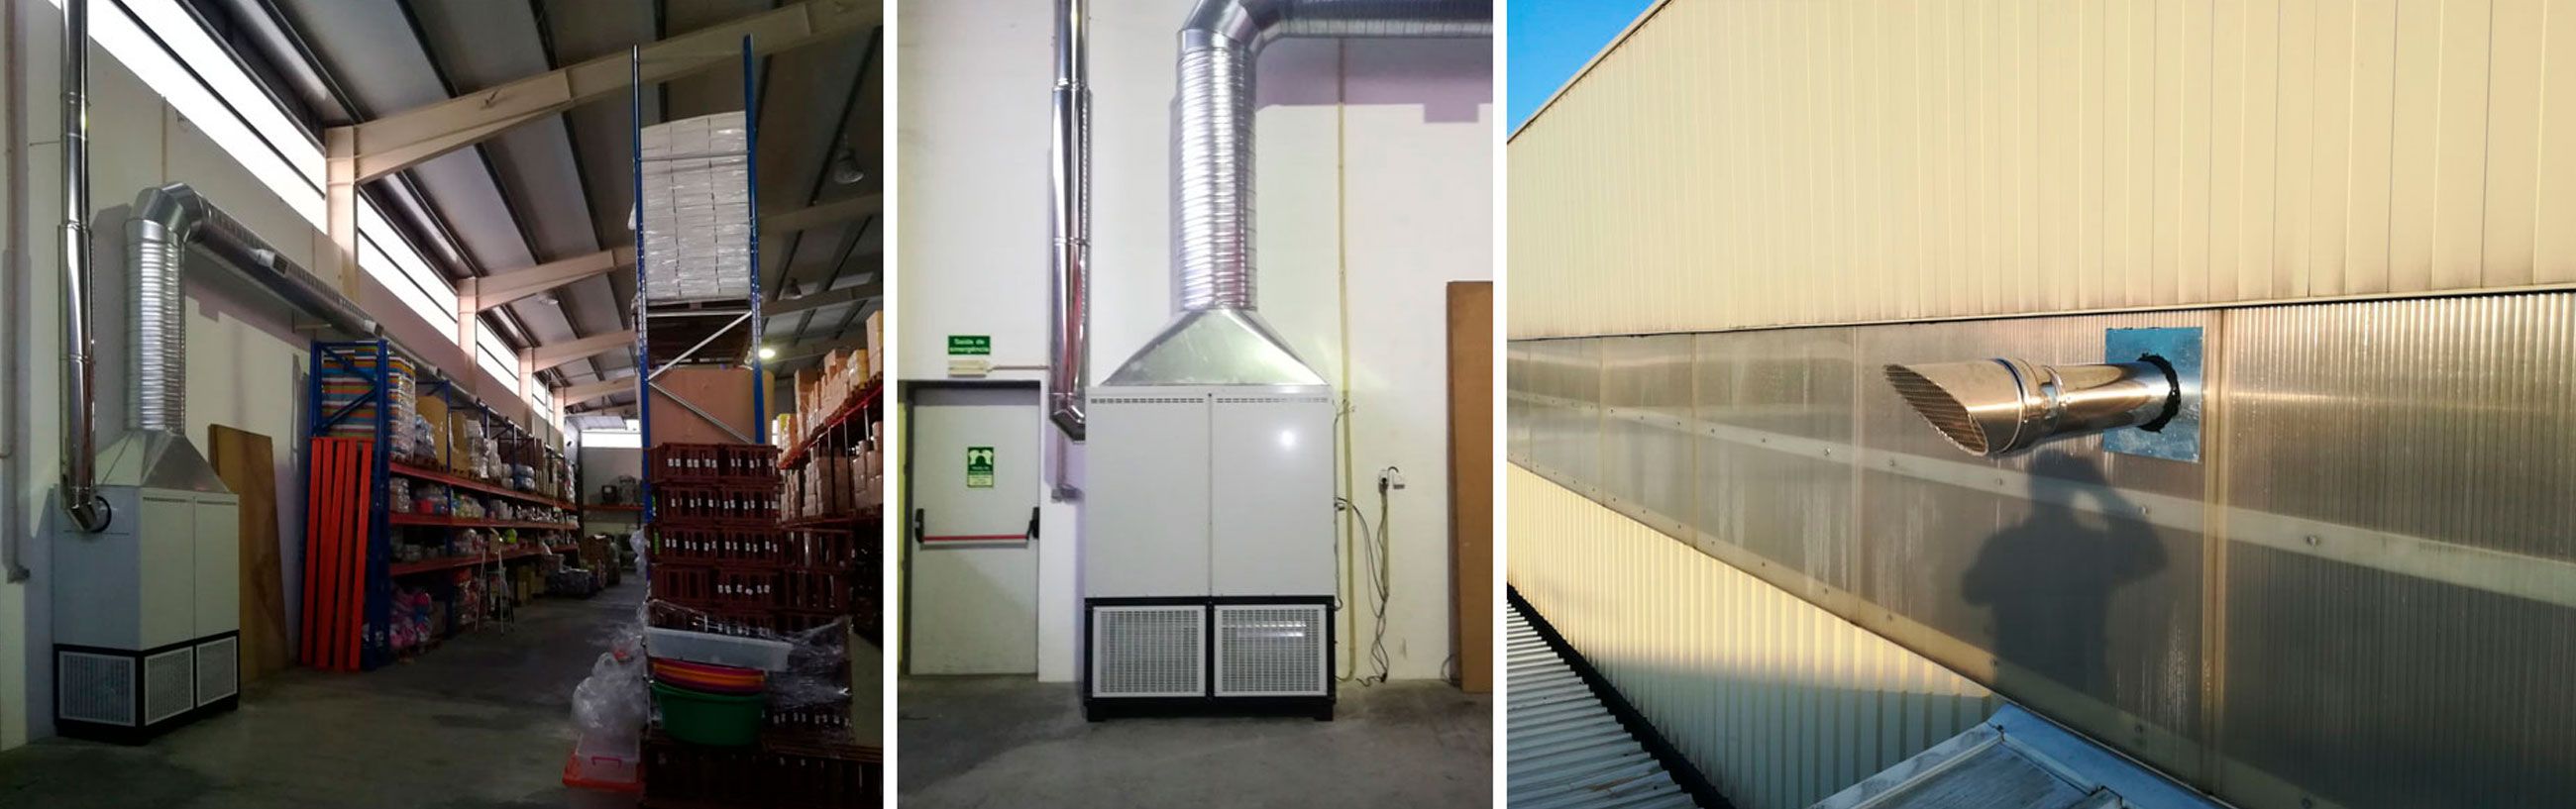 Chatron Industrial Heat Generators Installation Example 2